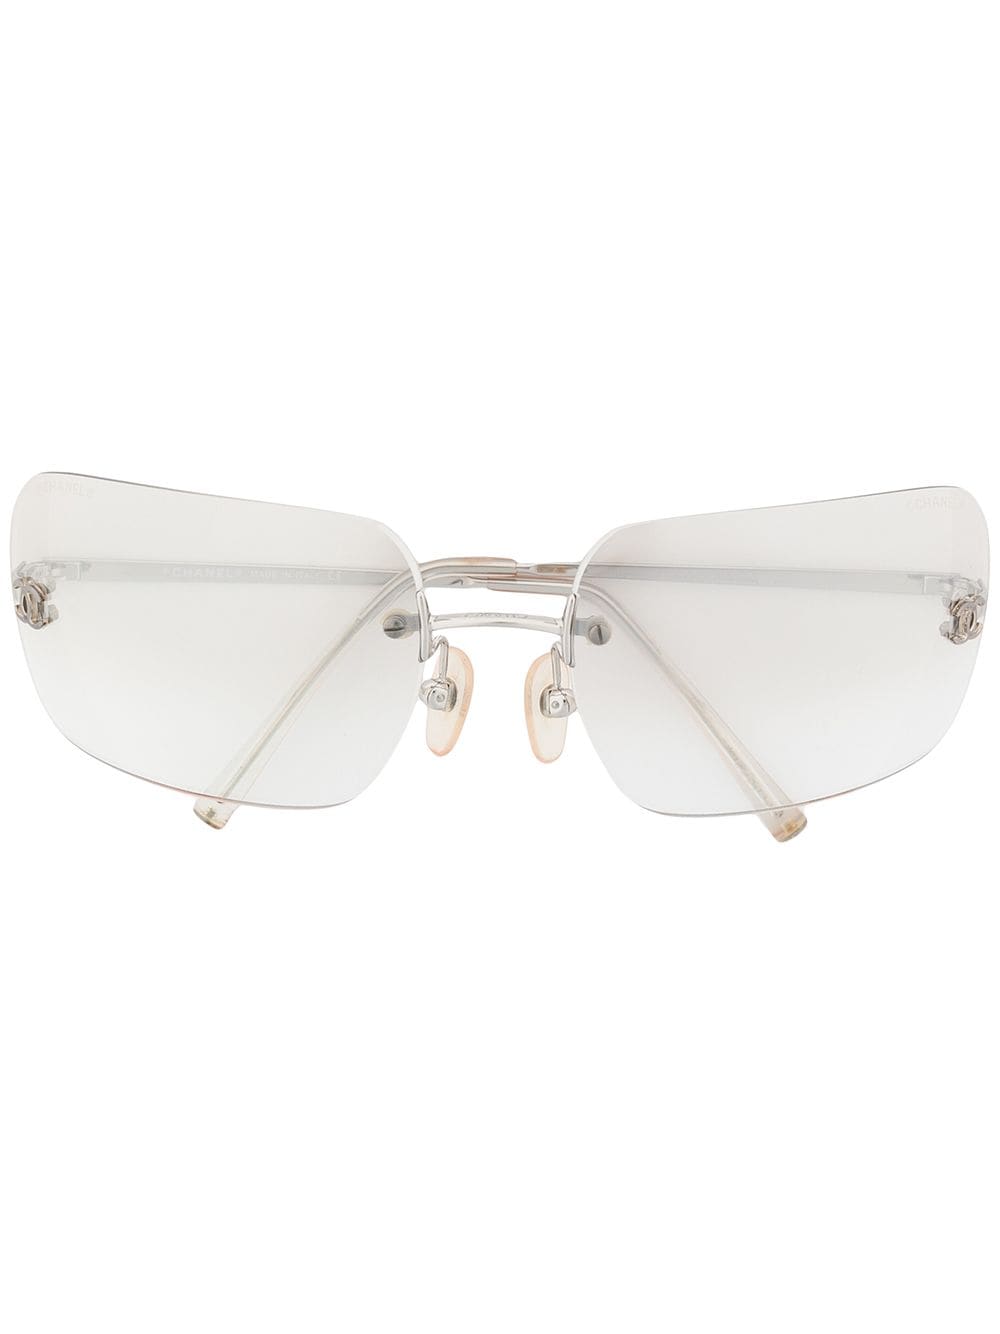 Pair Of Vintage Chanel Polarized Rimless Women's Sunglasses